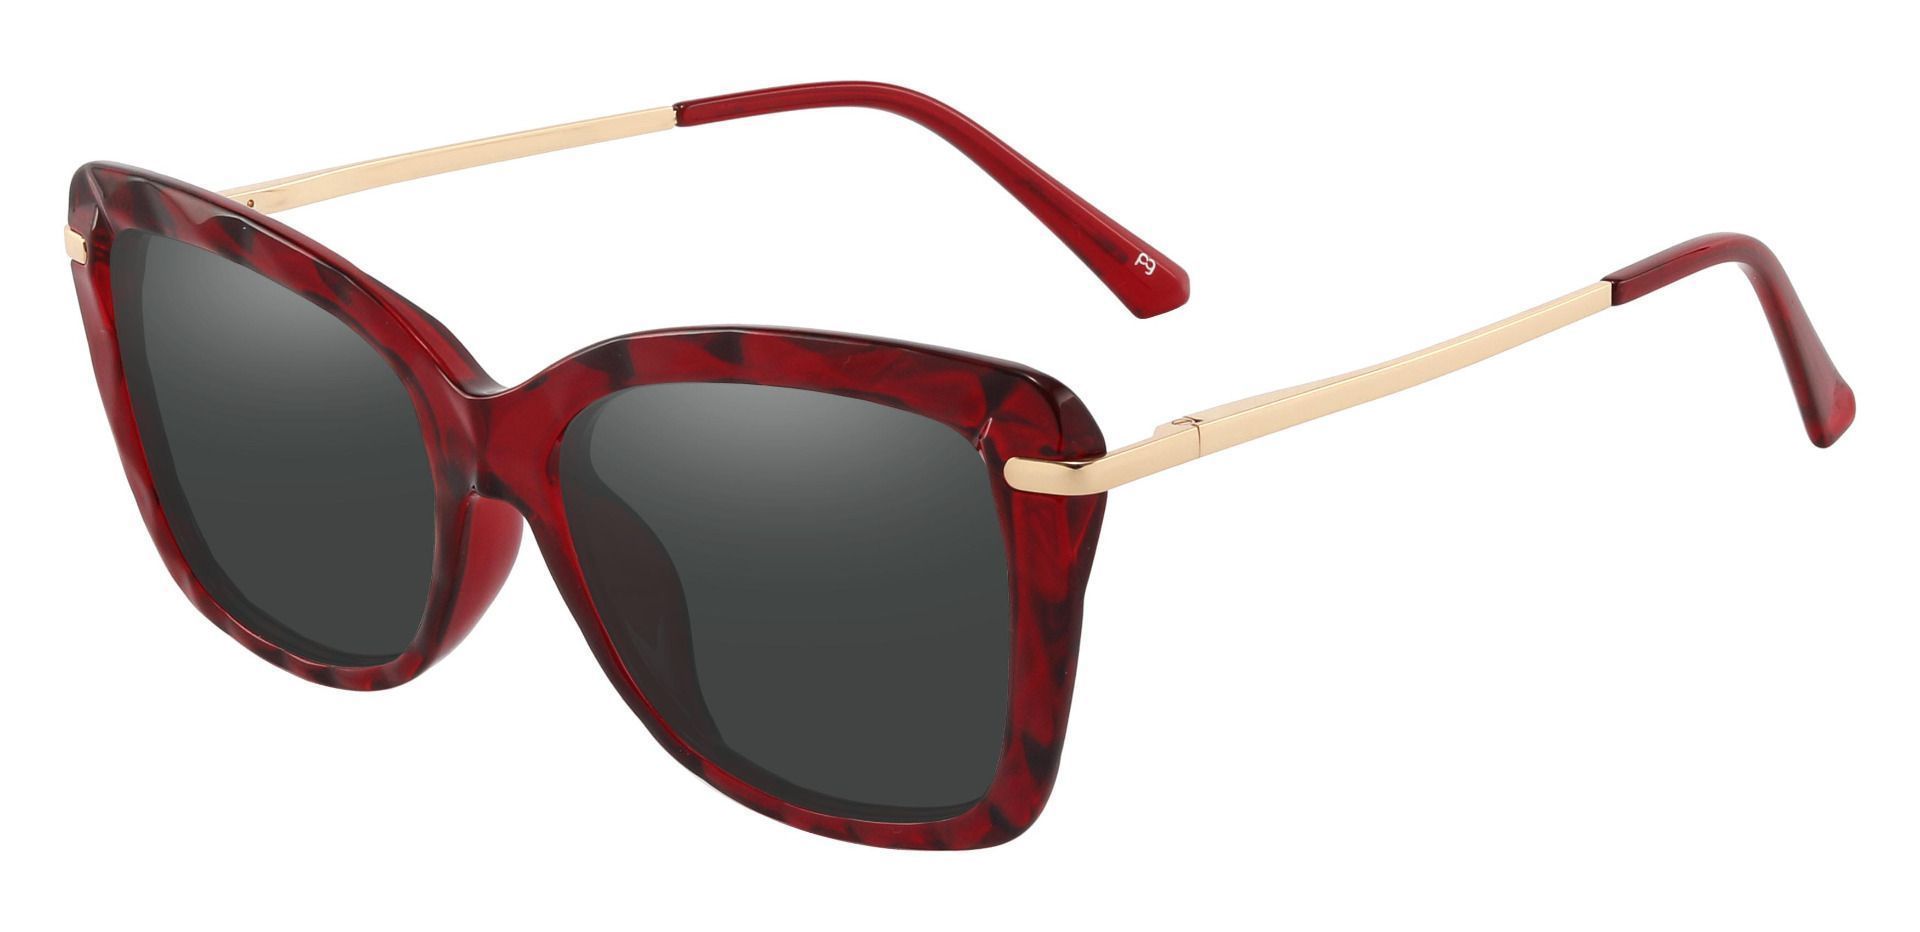 Shoshanna Rectangle Progressive Sunglasses - Red Frame With Gray Lenses